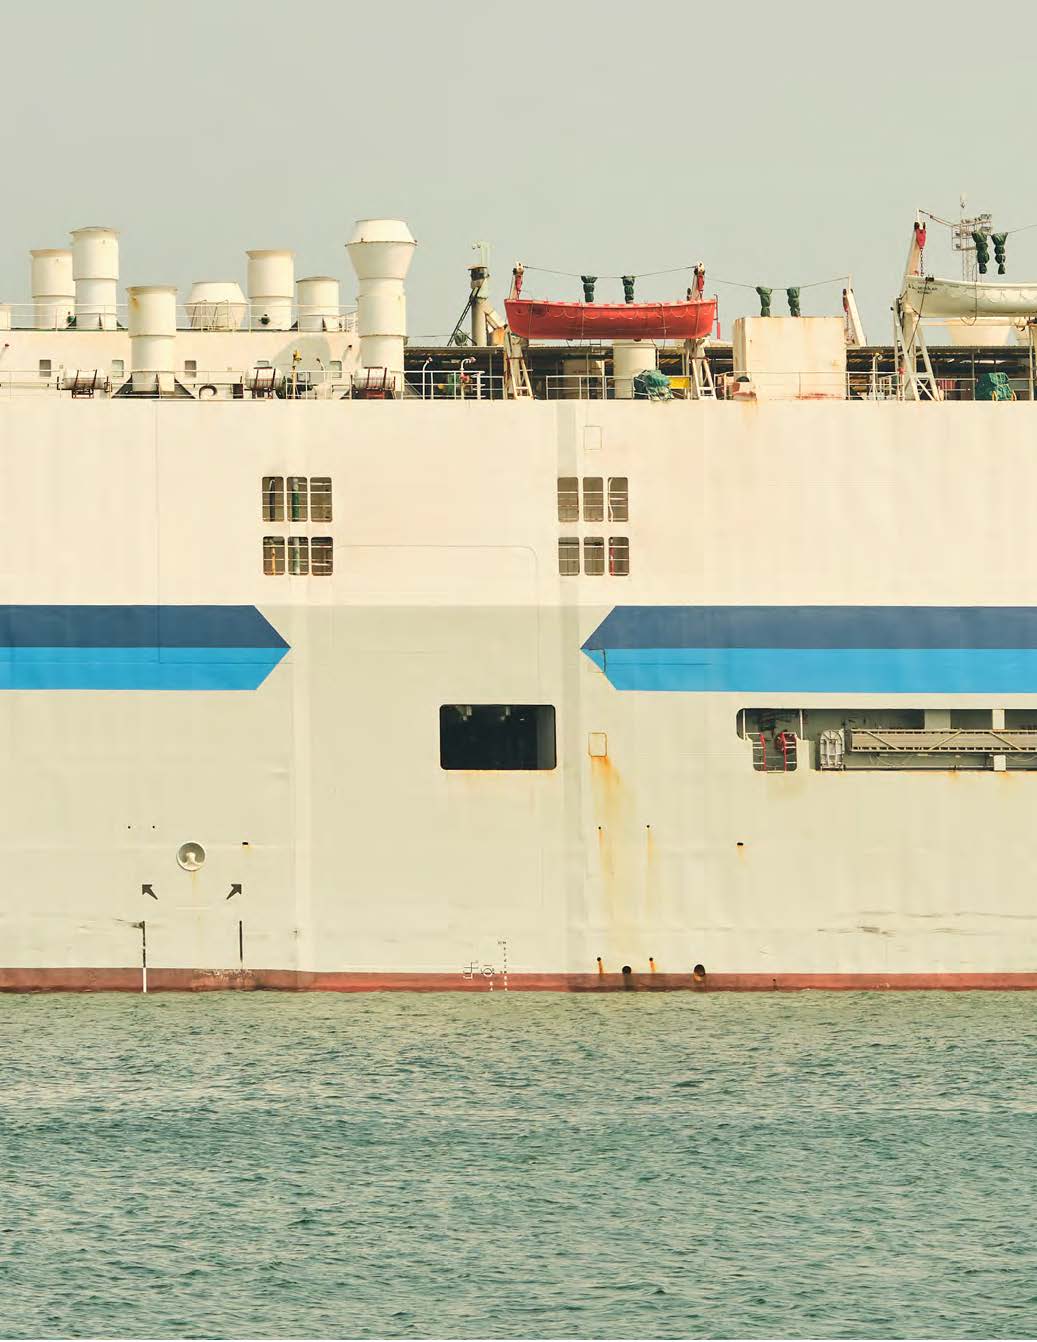 Fremantle Biennale SIGNALS 23. View of Fremantle port, Ships docked. 